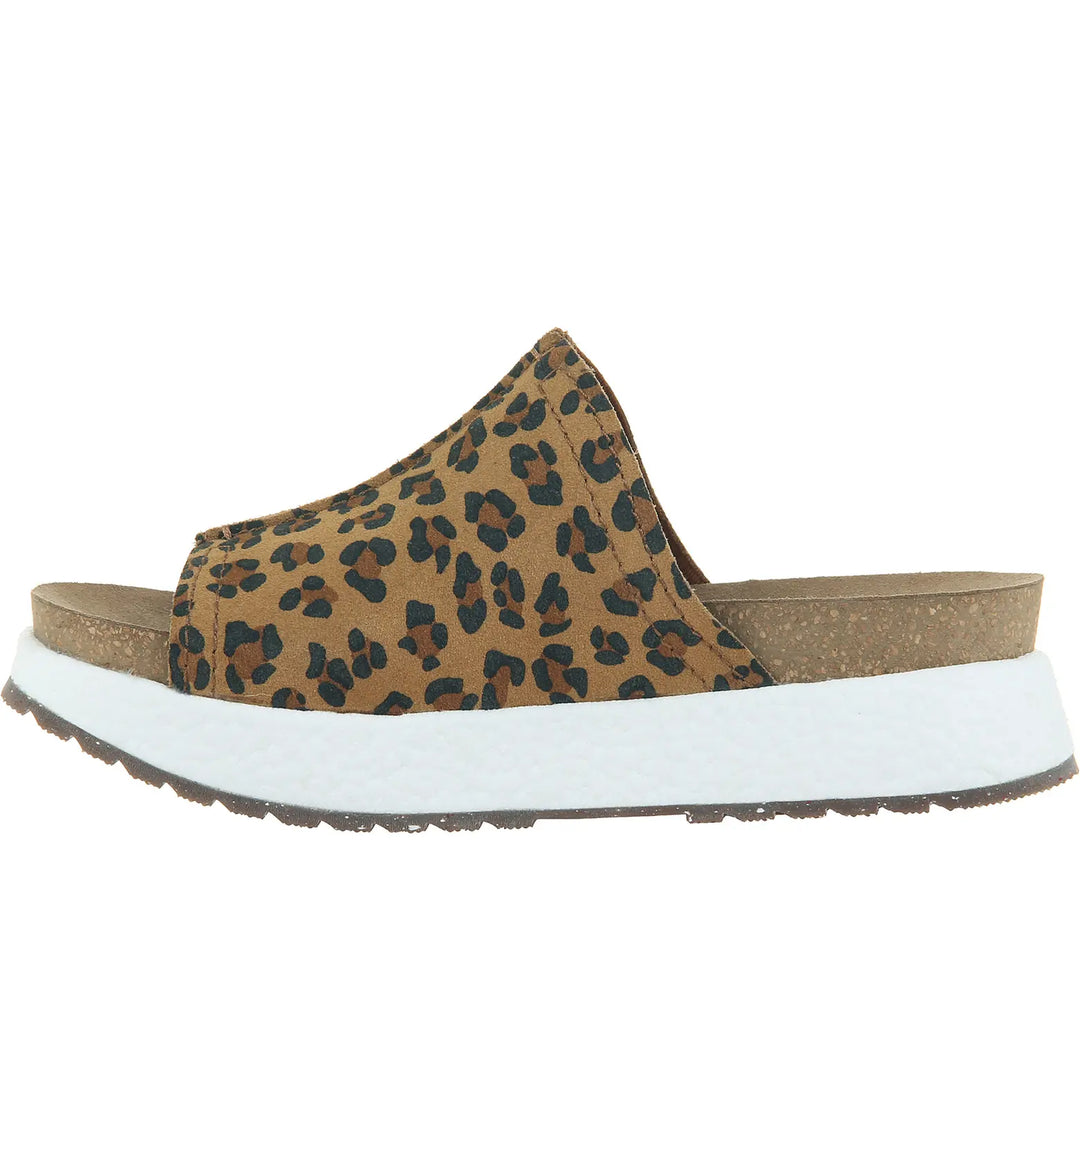 OTBT Wayside Leopard Sandals